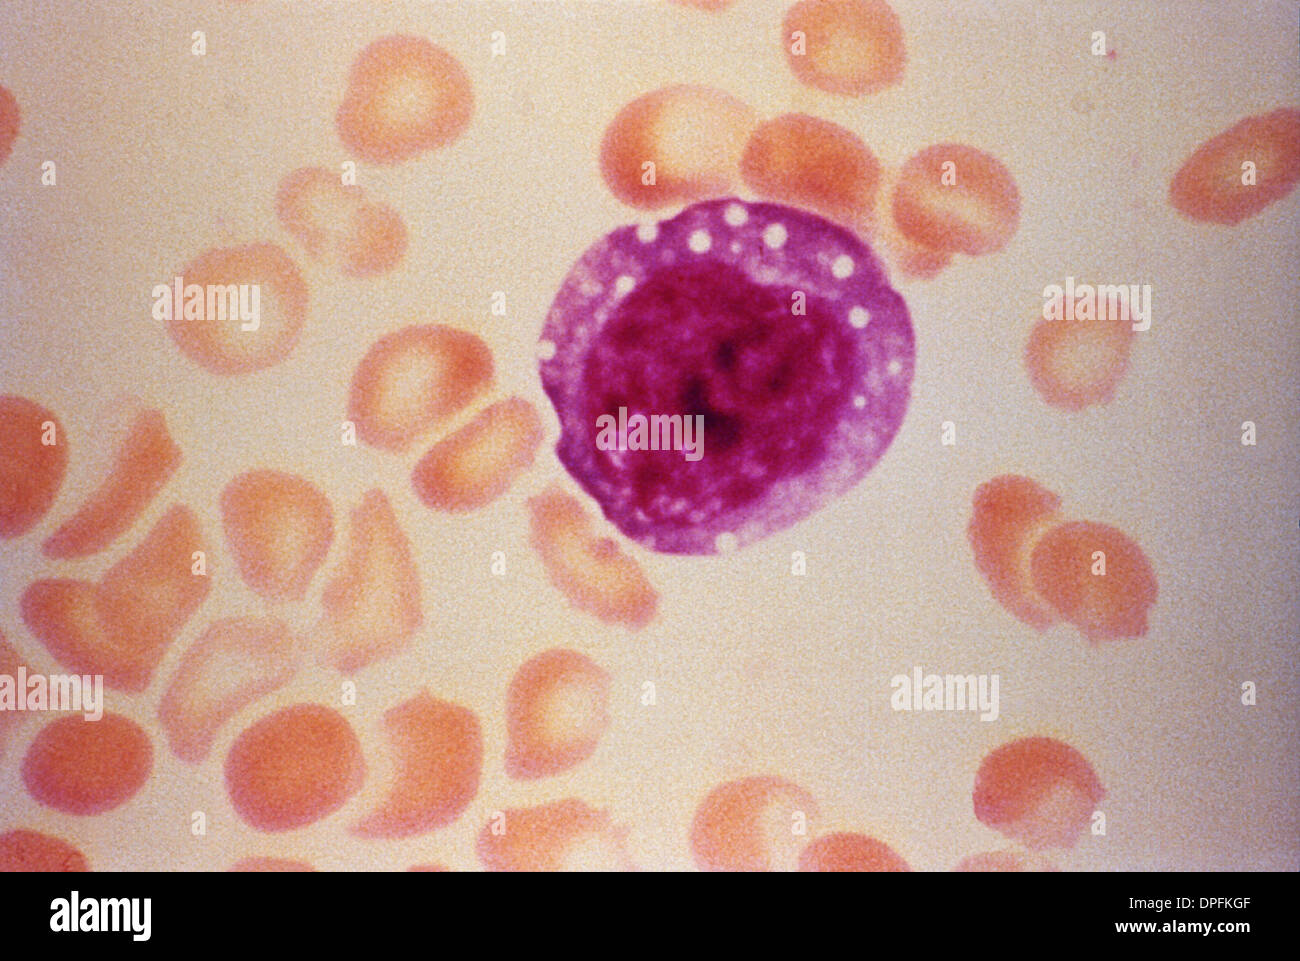 lymphocyte of Henoch-Sch?nlein purpura (HPS) Stock Photo